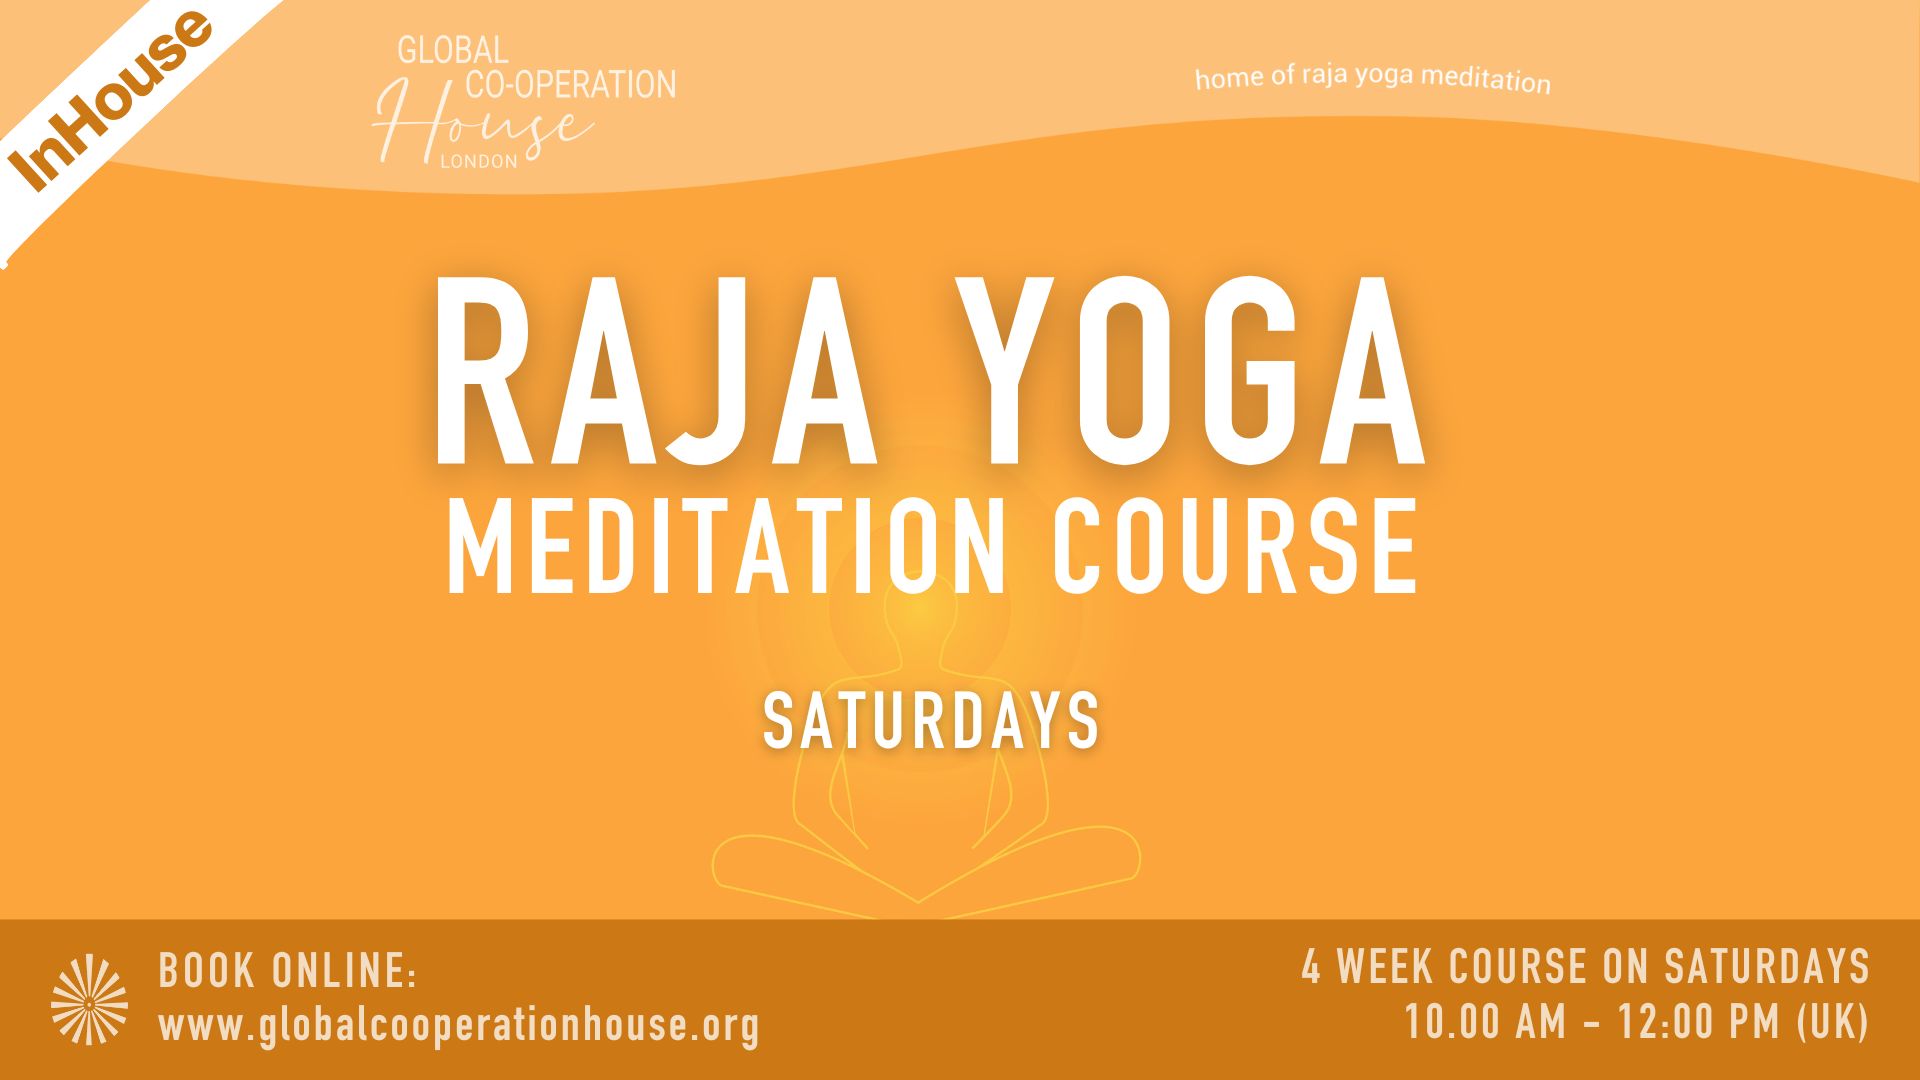 In House - Raja Yoga Meditation Course - Saturday mornings